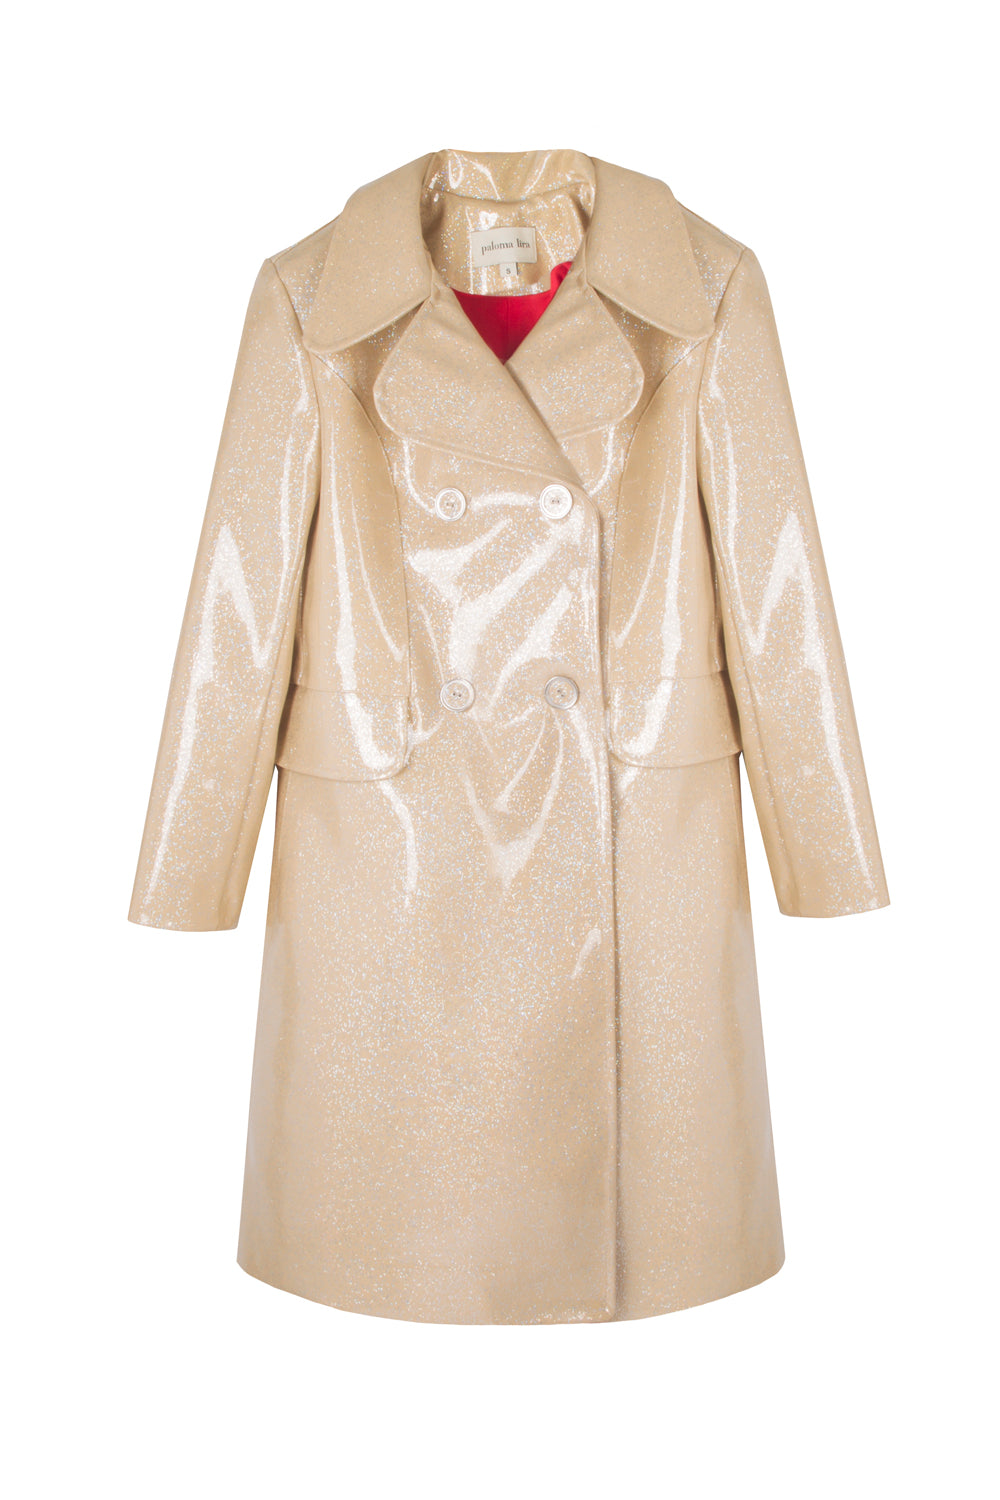 SAMPLE Glitter nude coat